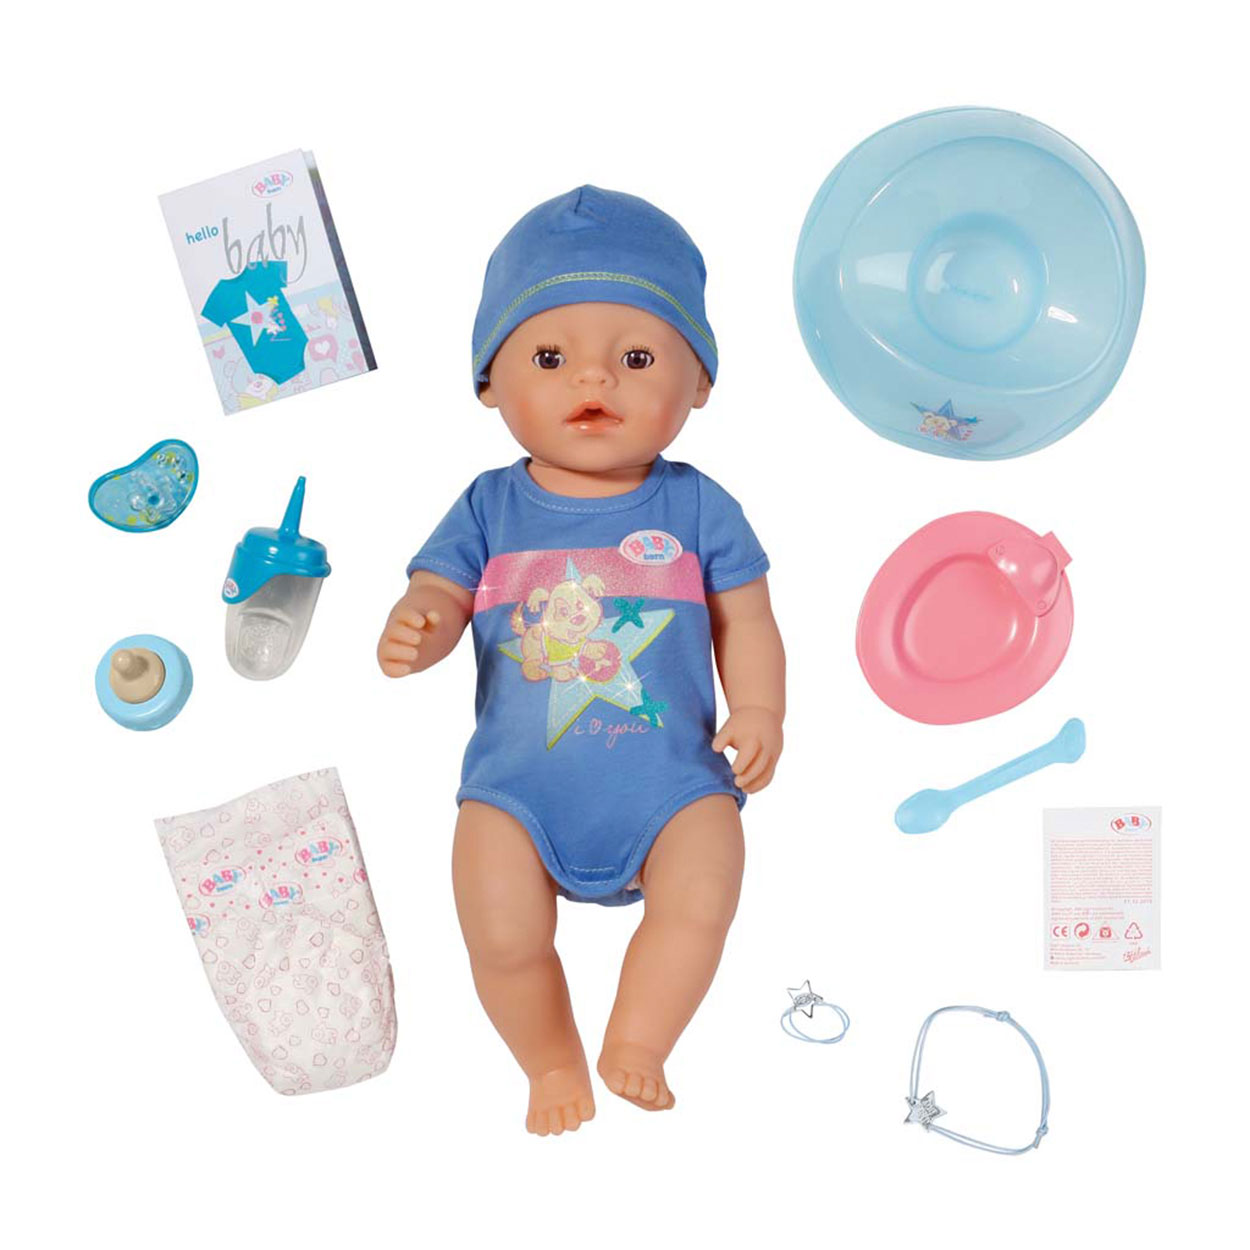 Korea dorst zeemijl BABY born BOY Interactieve Pop | Thimble Toys